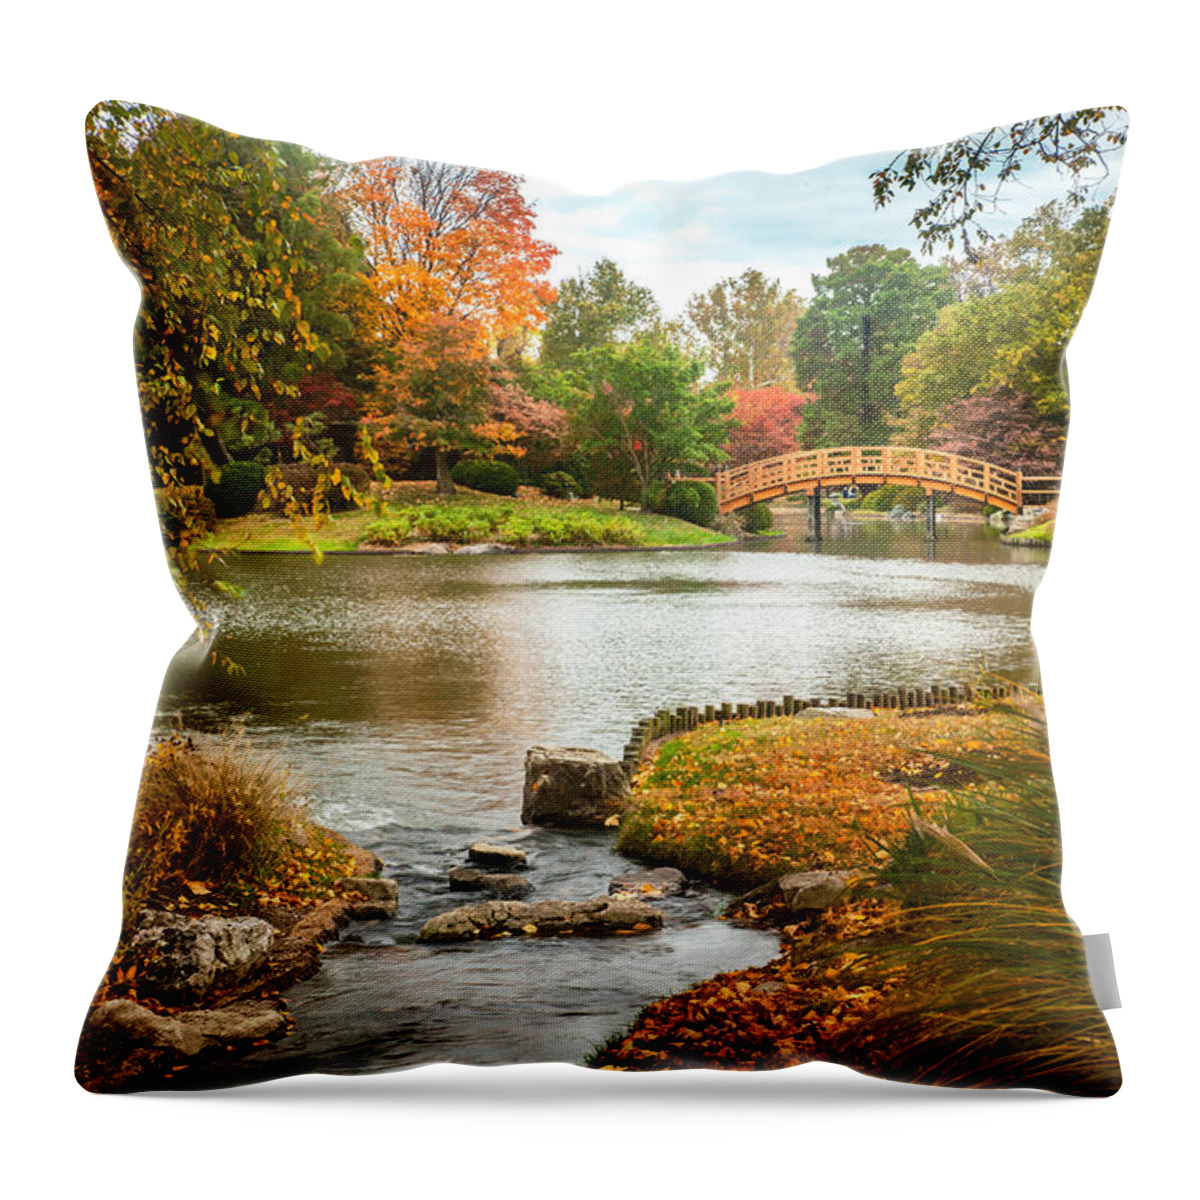 Botanical Throw Pillow featuring the photograph Japanese Garden Bridge Fall by David Coblitz